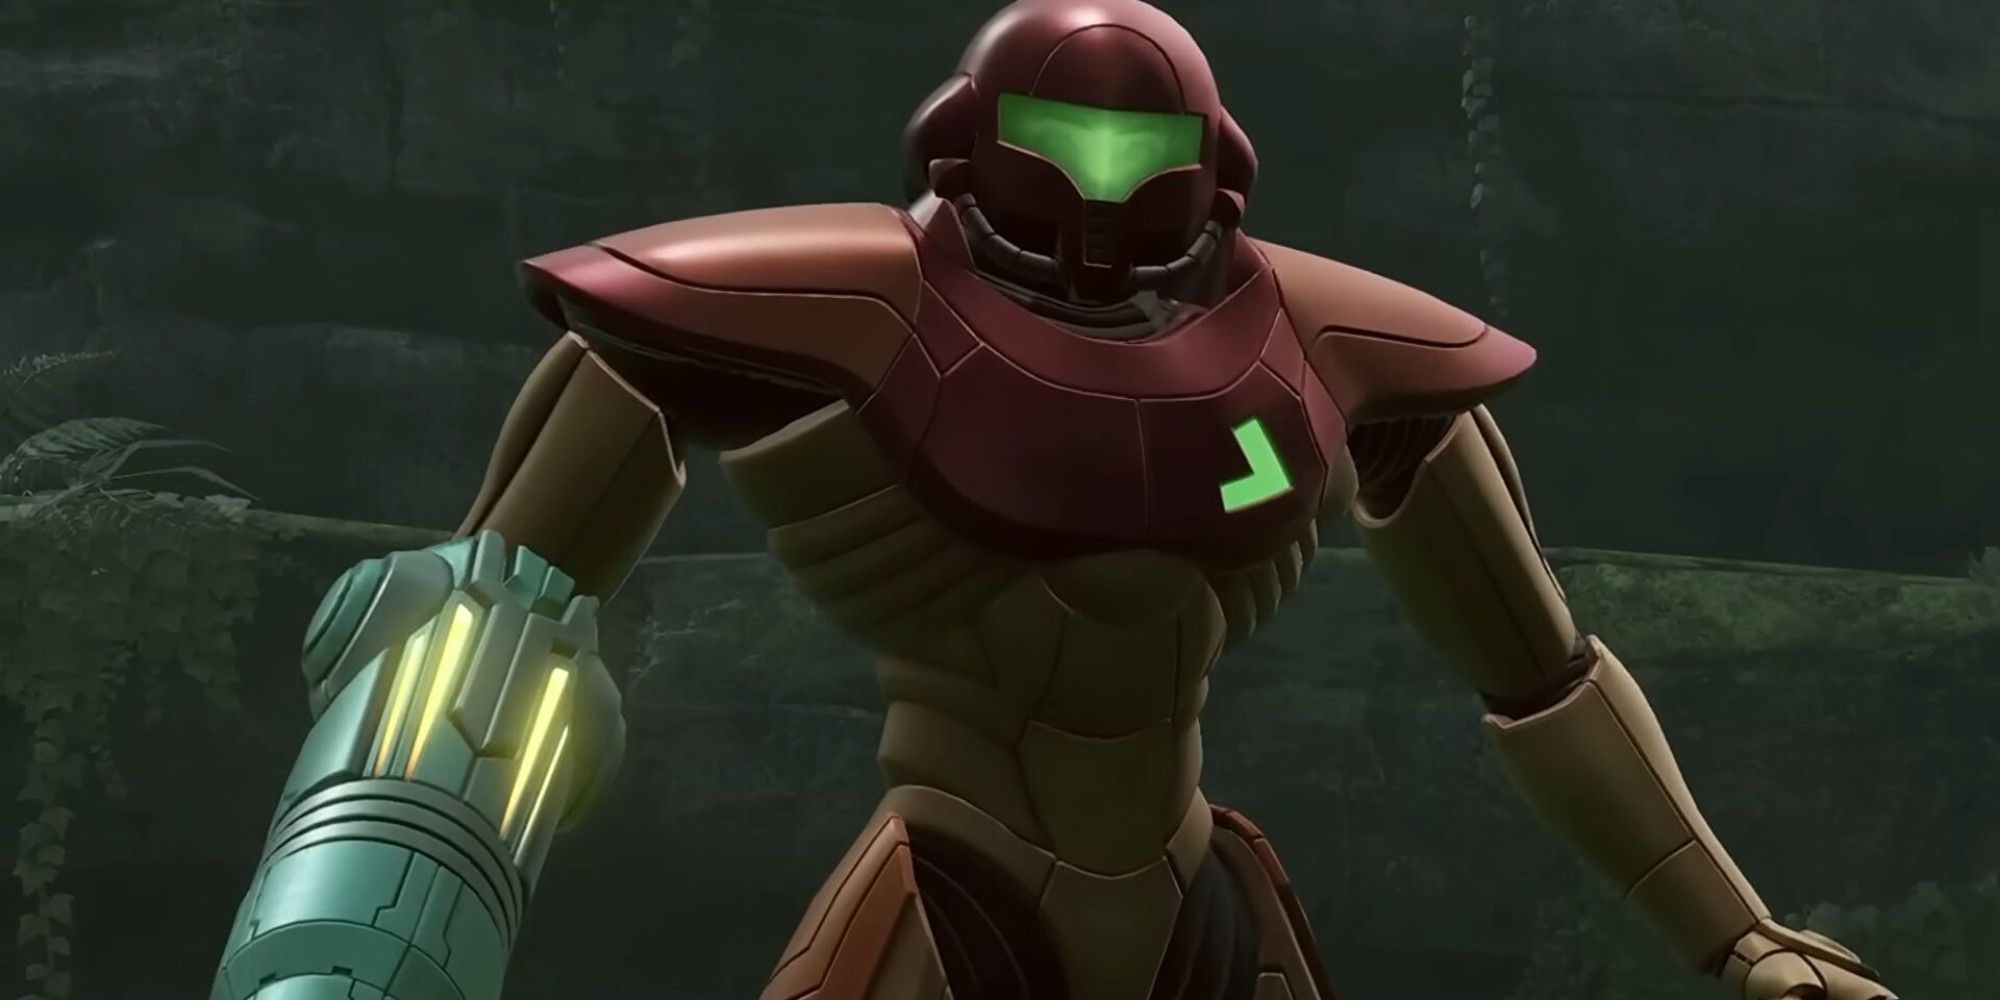 Samus Aran in a suit in Metroid Prime